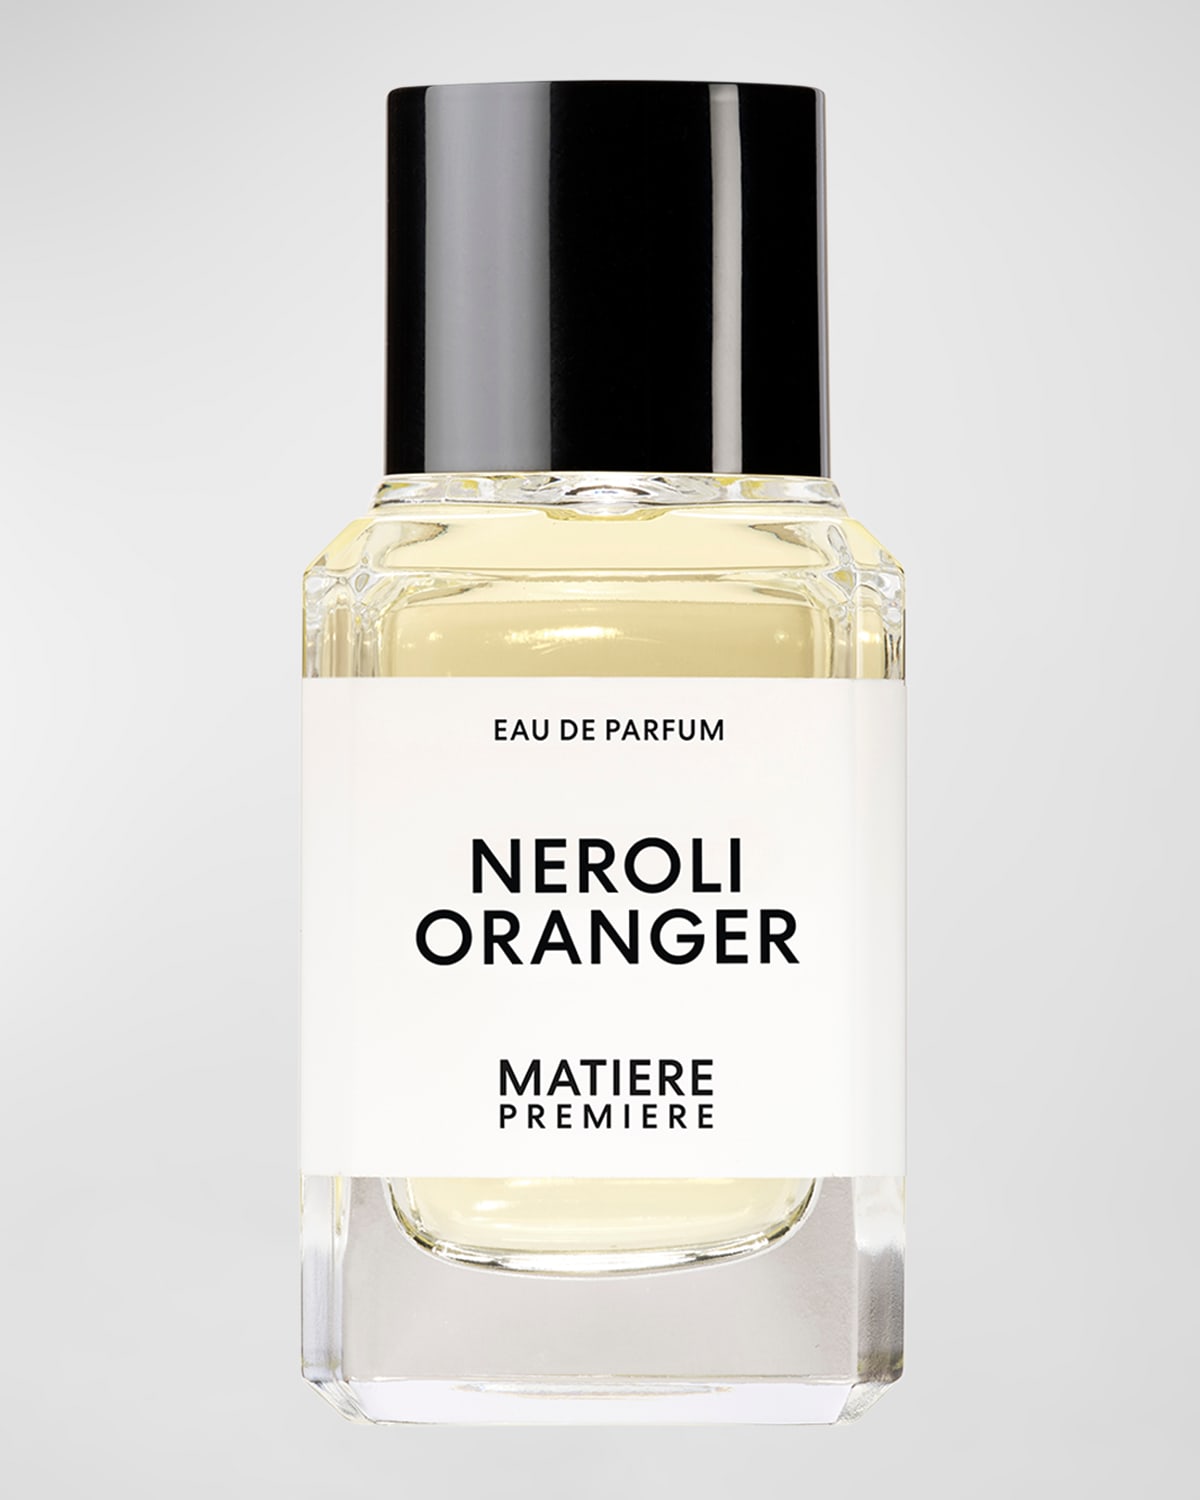 Neroli Oranger Eau de Parfum, 1.7 oz.